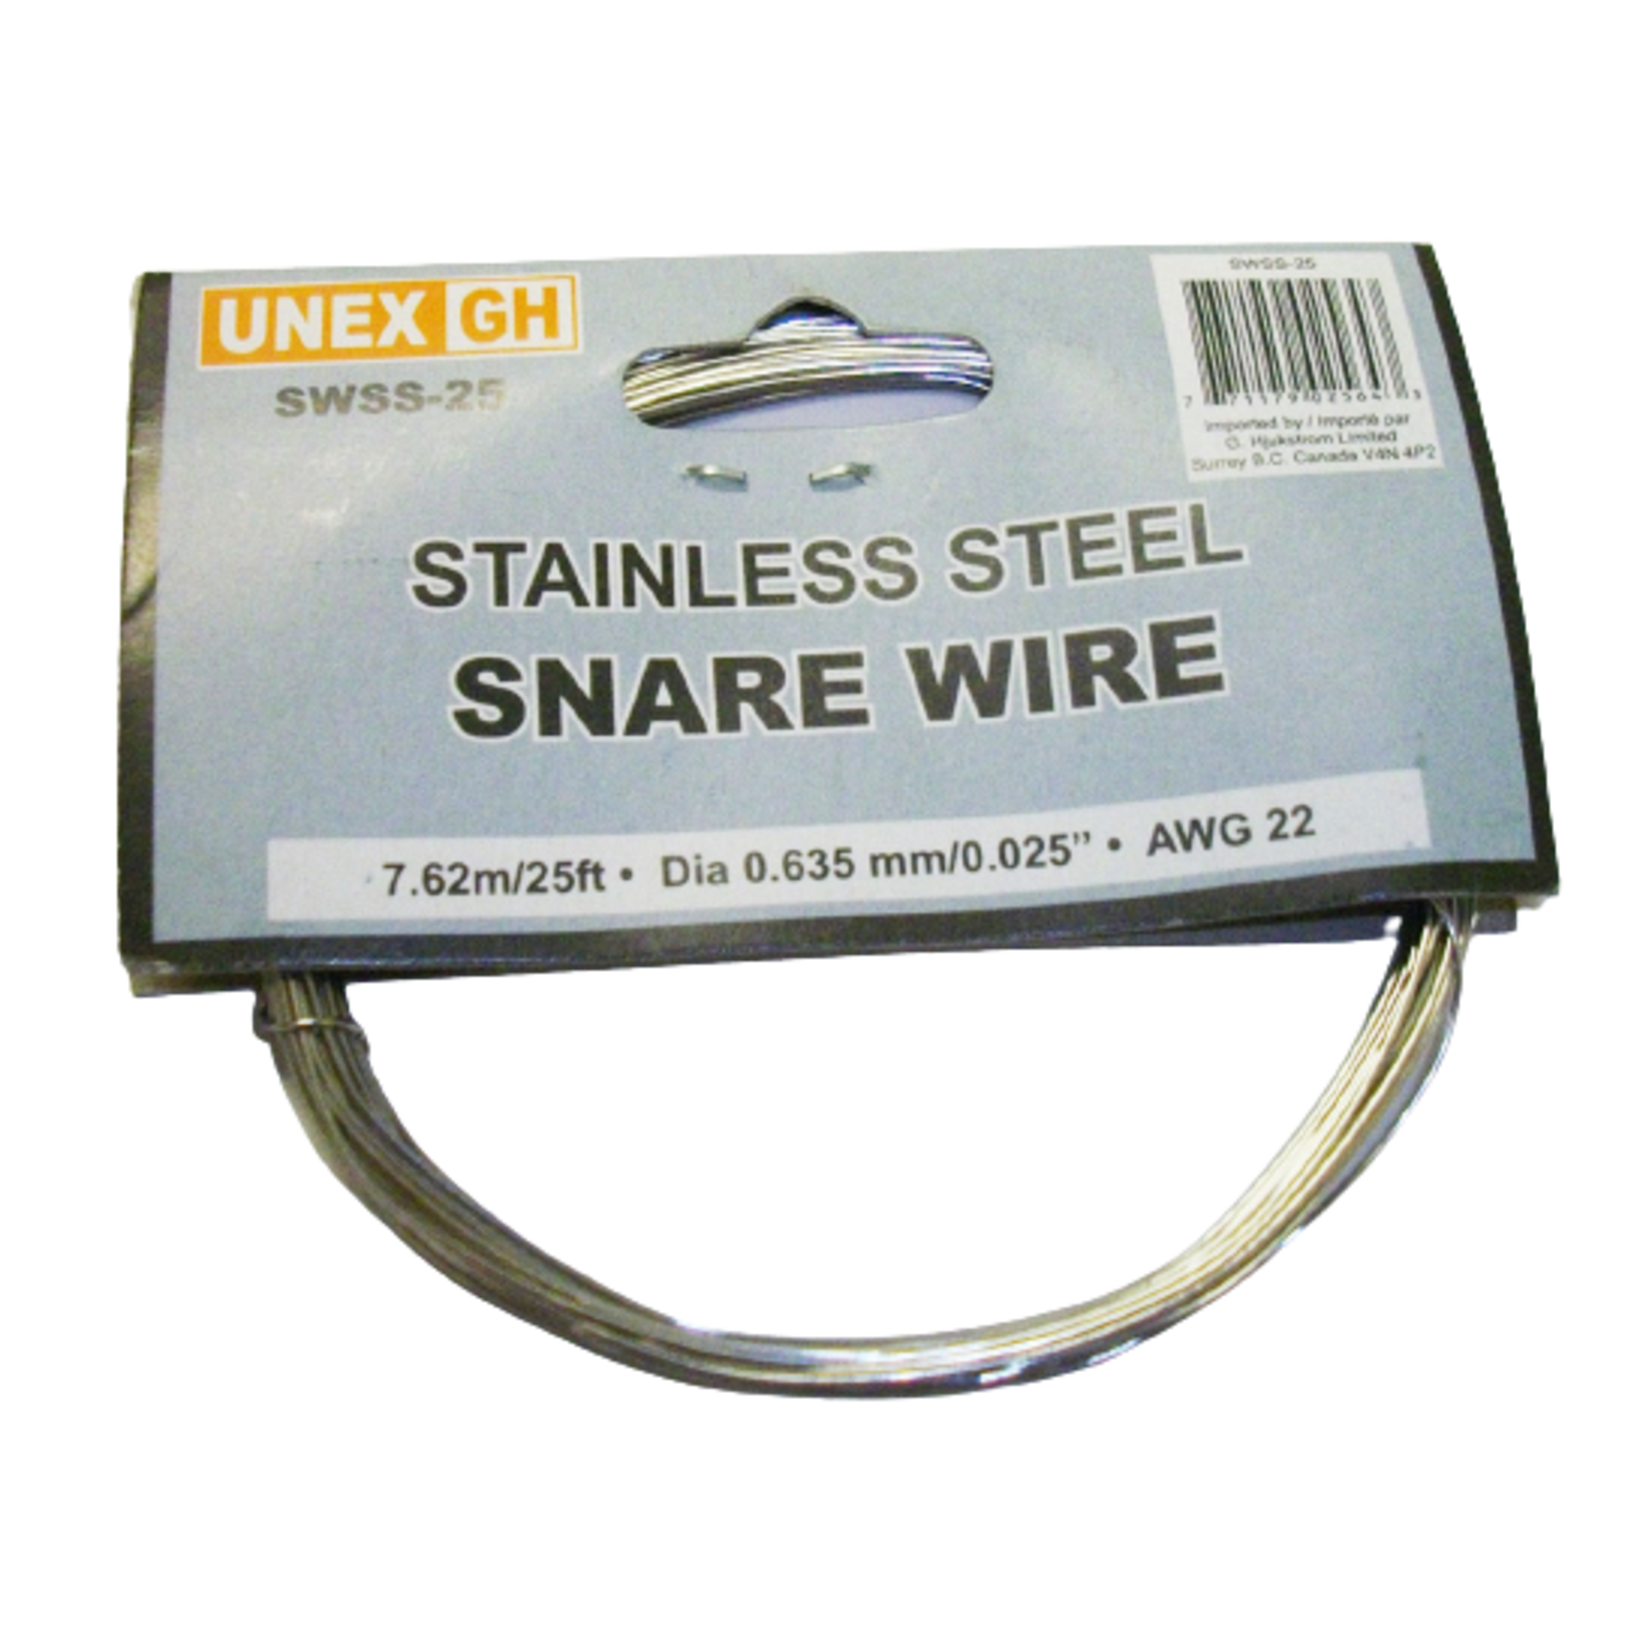 STAINLESS STEEL SNARE WIRE 25FT - North Cobalt Flea Market